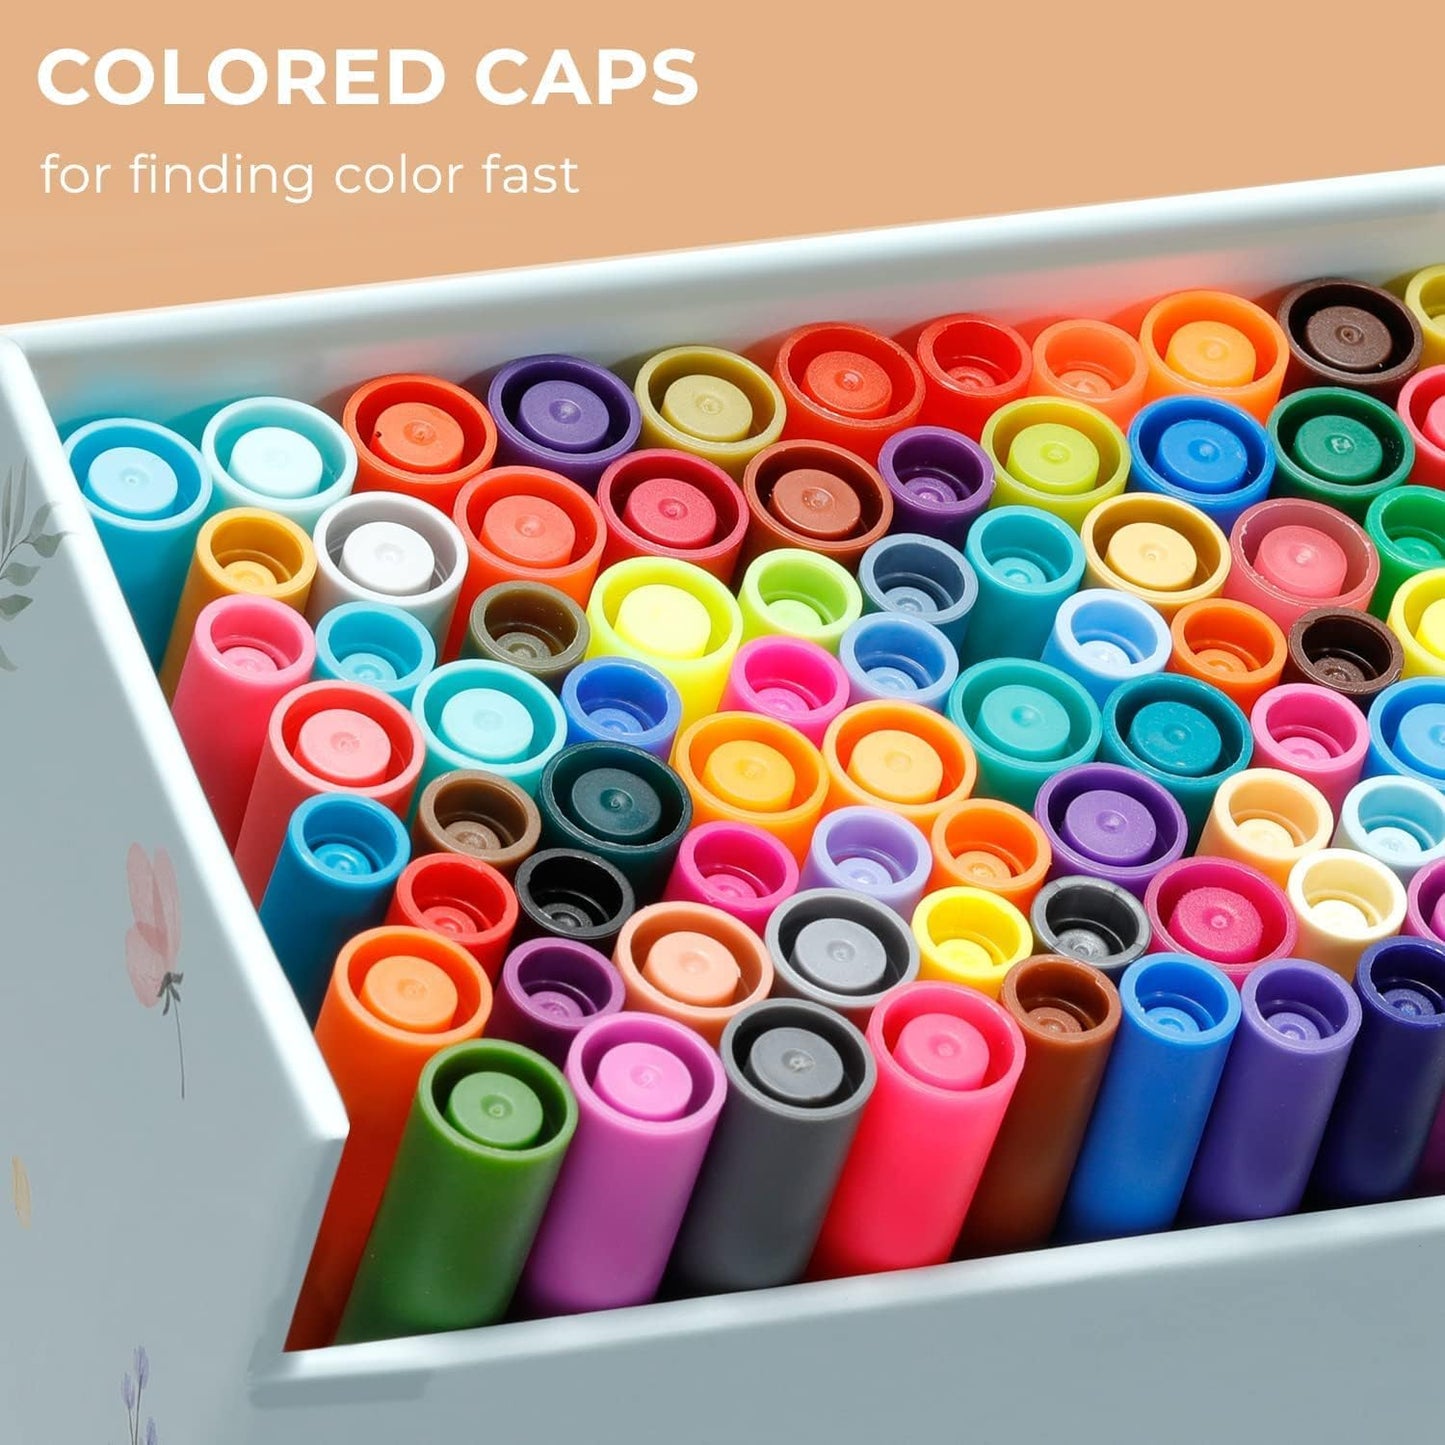 Ohuhu 120 colors water based marker set - Brush & Fineliner artlantis